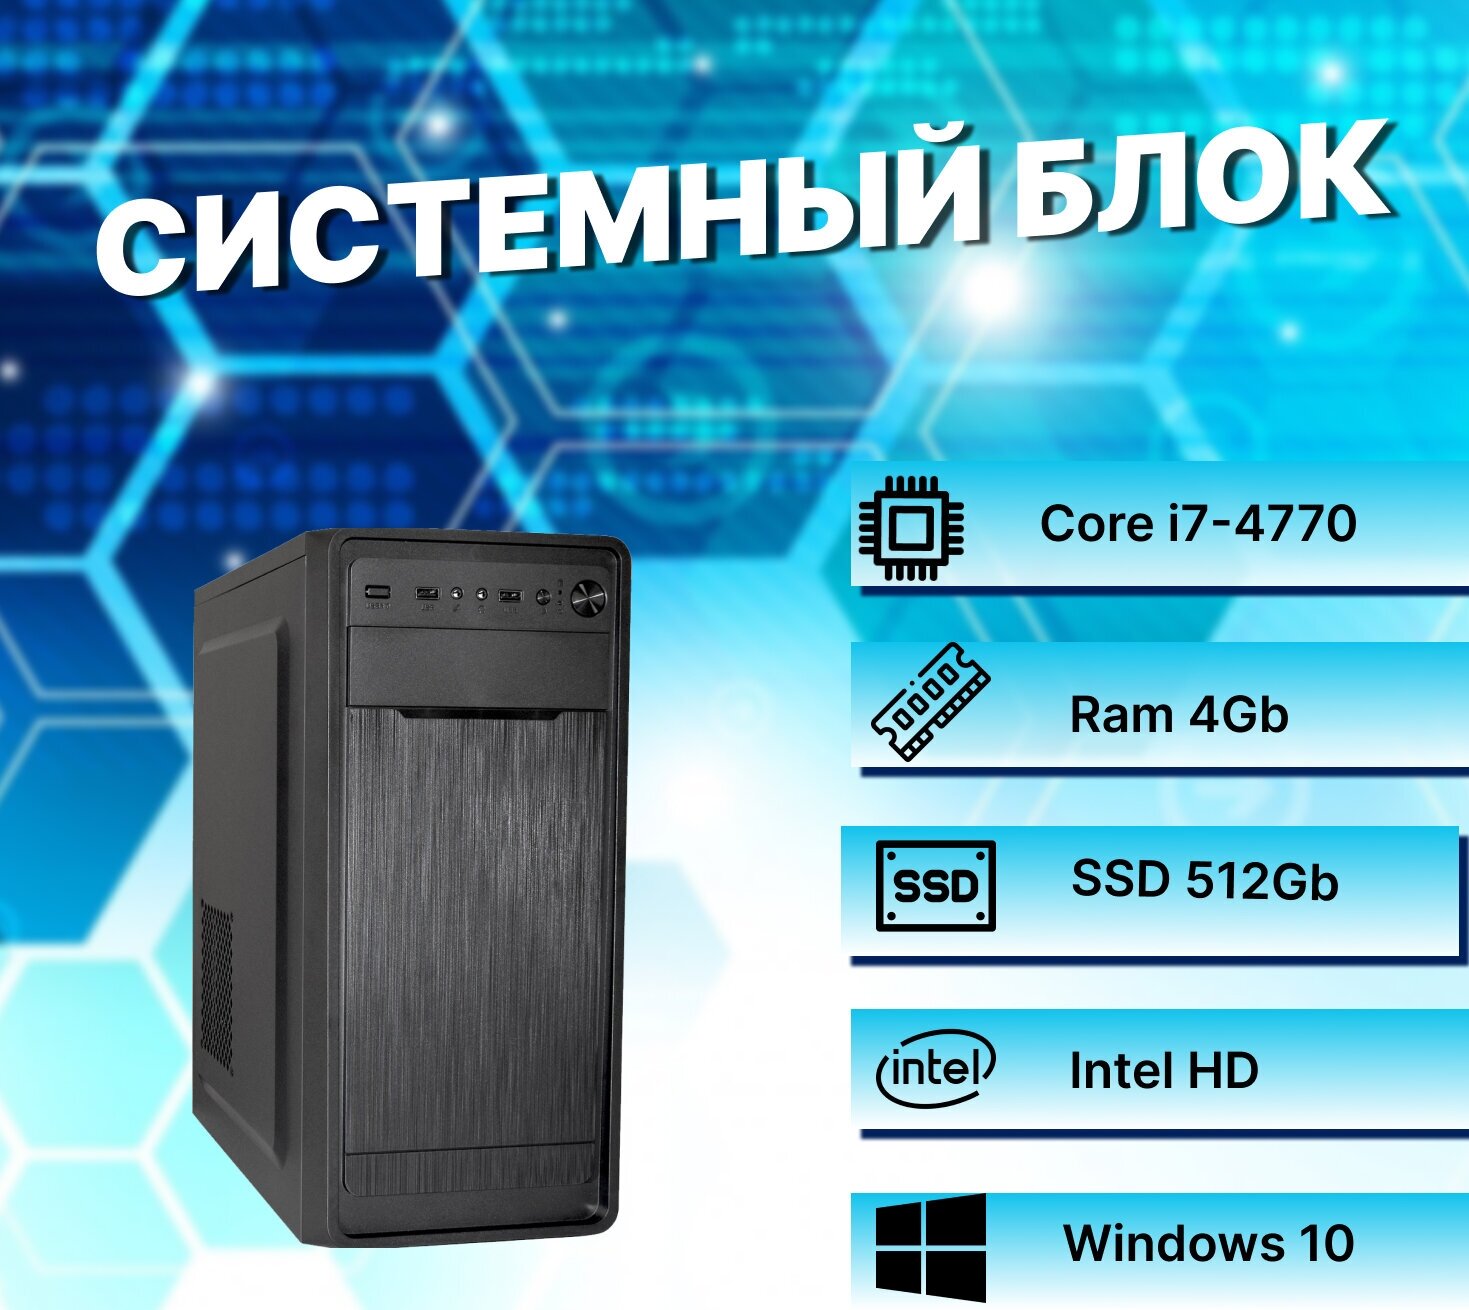 Системный блок Intel Core i7-4770 (3.4ГГц)/ RAM 4Gb/ SSD 512Gb/ Intel HD/ Windows 10 Pro